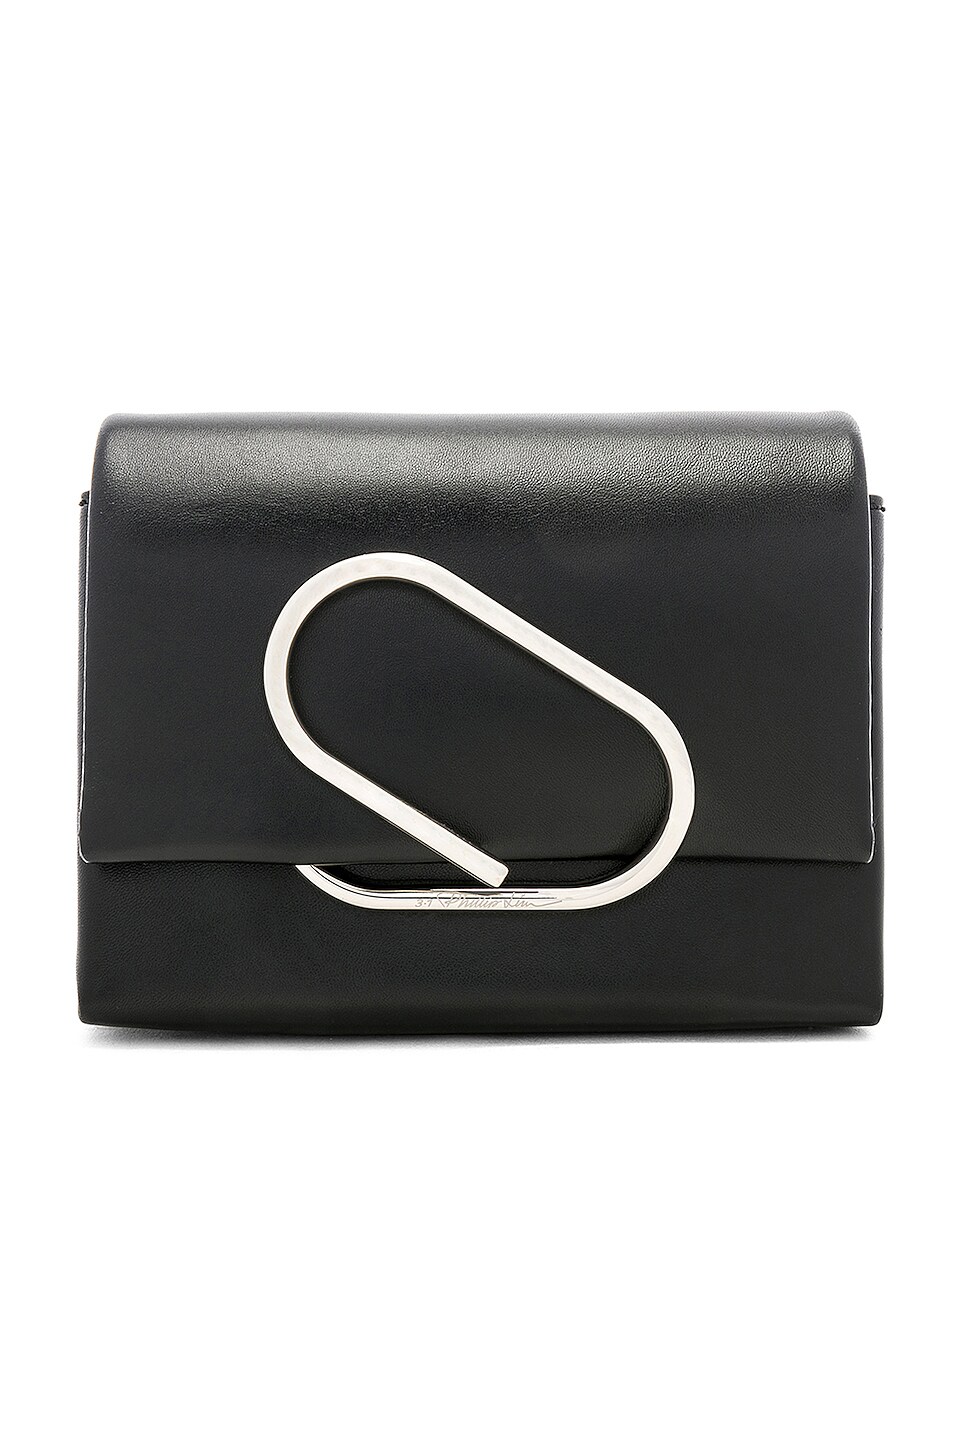 3.1 phillip lim Alix Crossbody Bag in Black | REVOLVE